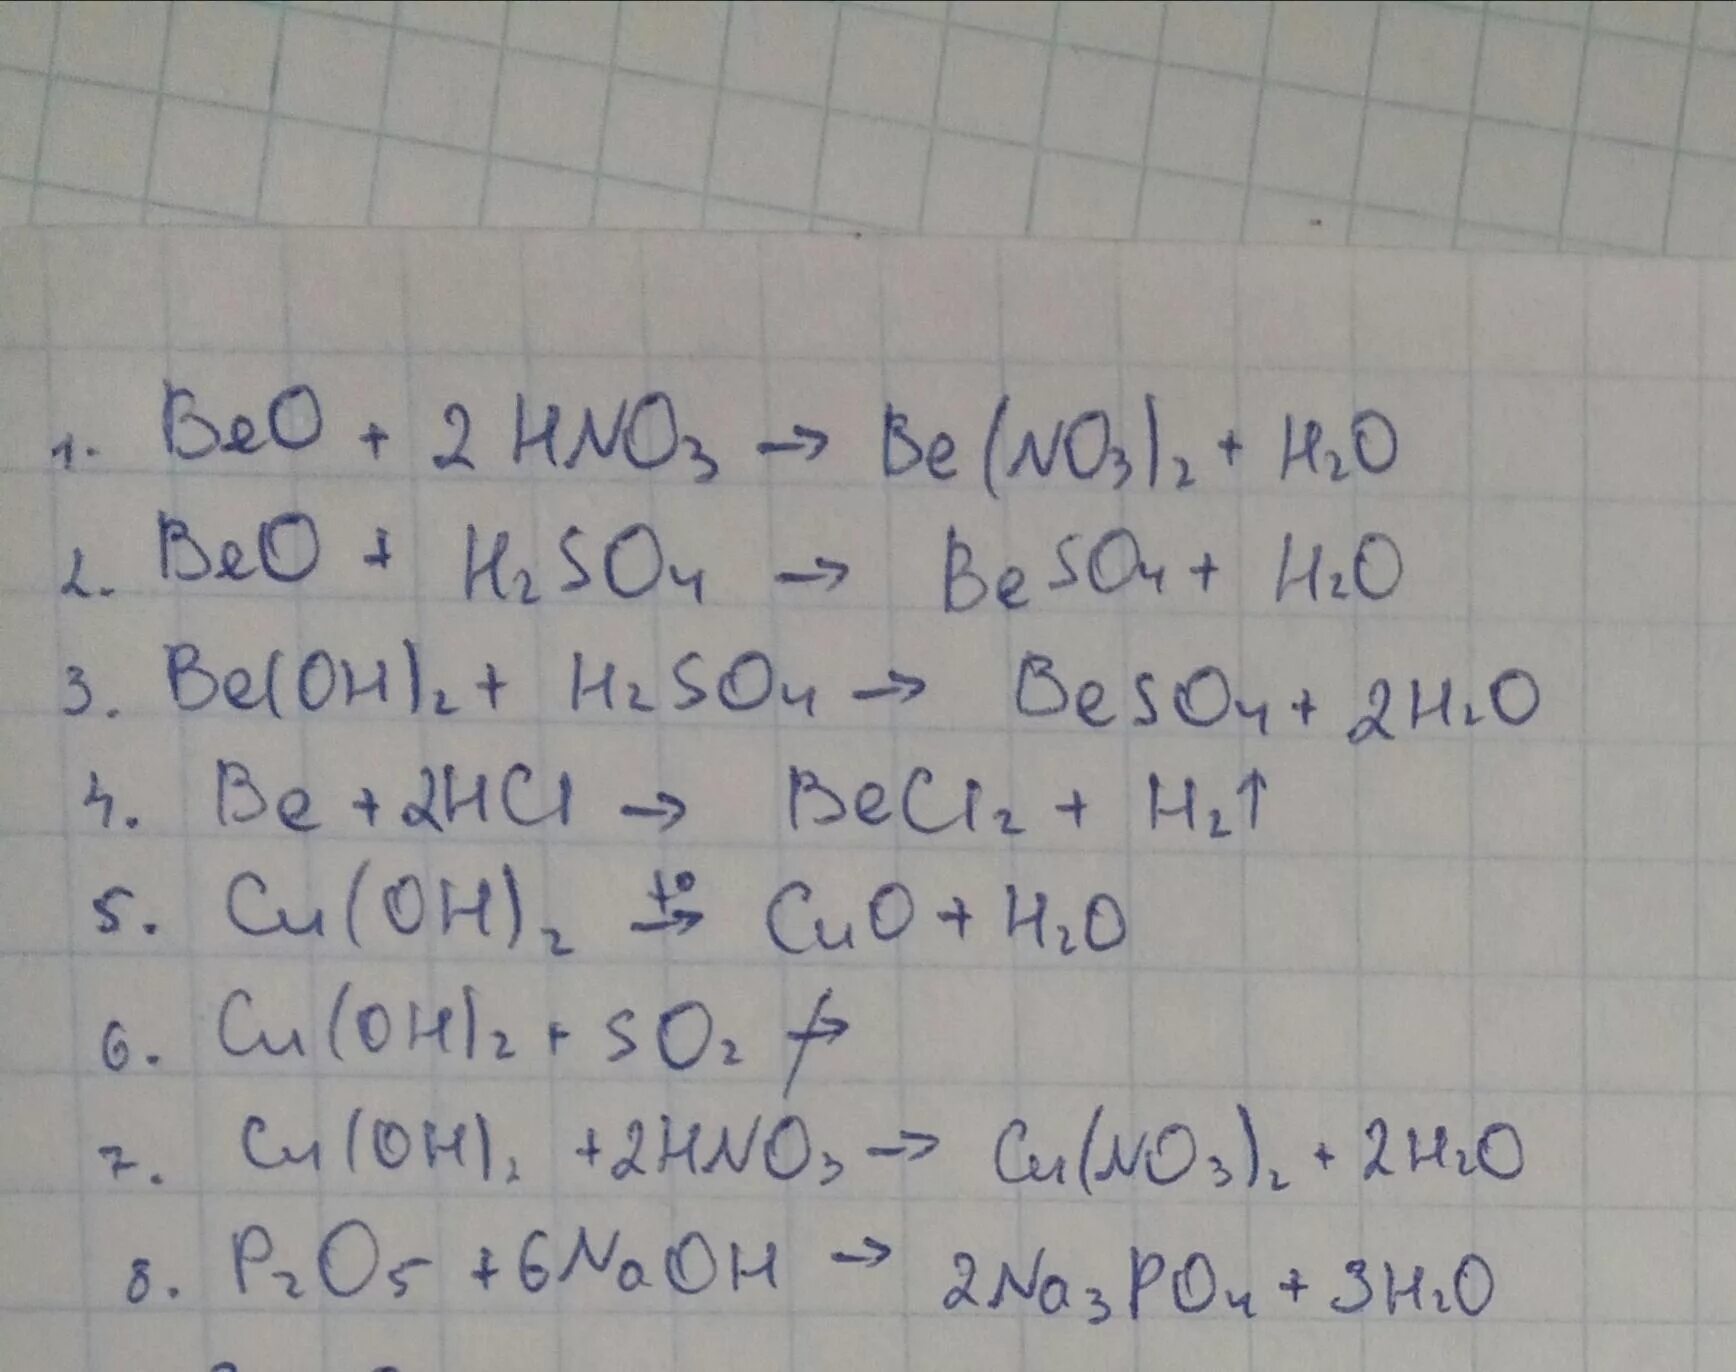 H2so4 beo уравнение. Beo h2so4 ОВР. Beo h2so4 beso4 h2o характеристика. Beo+h2so4 ионное уравнение.